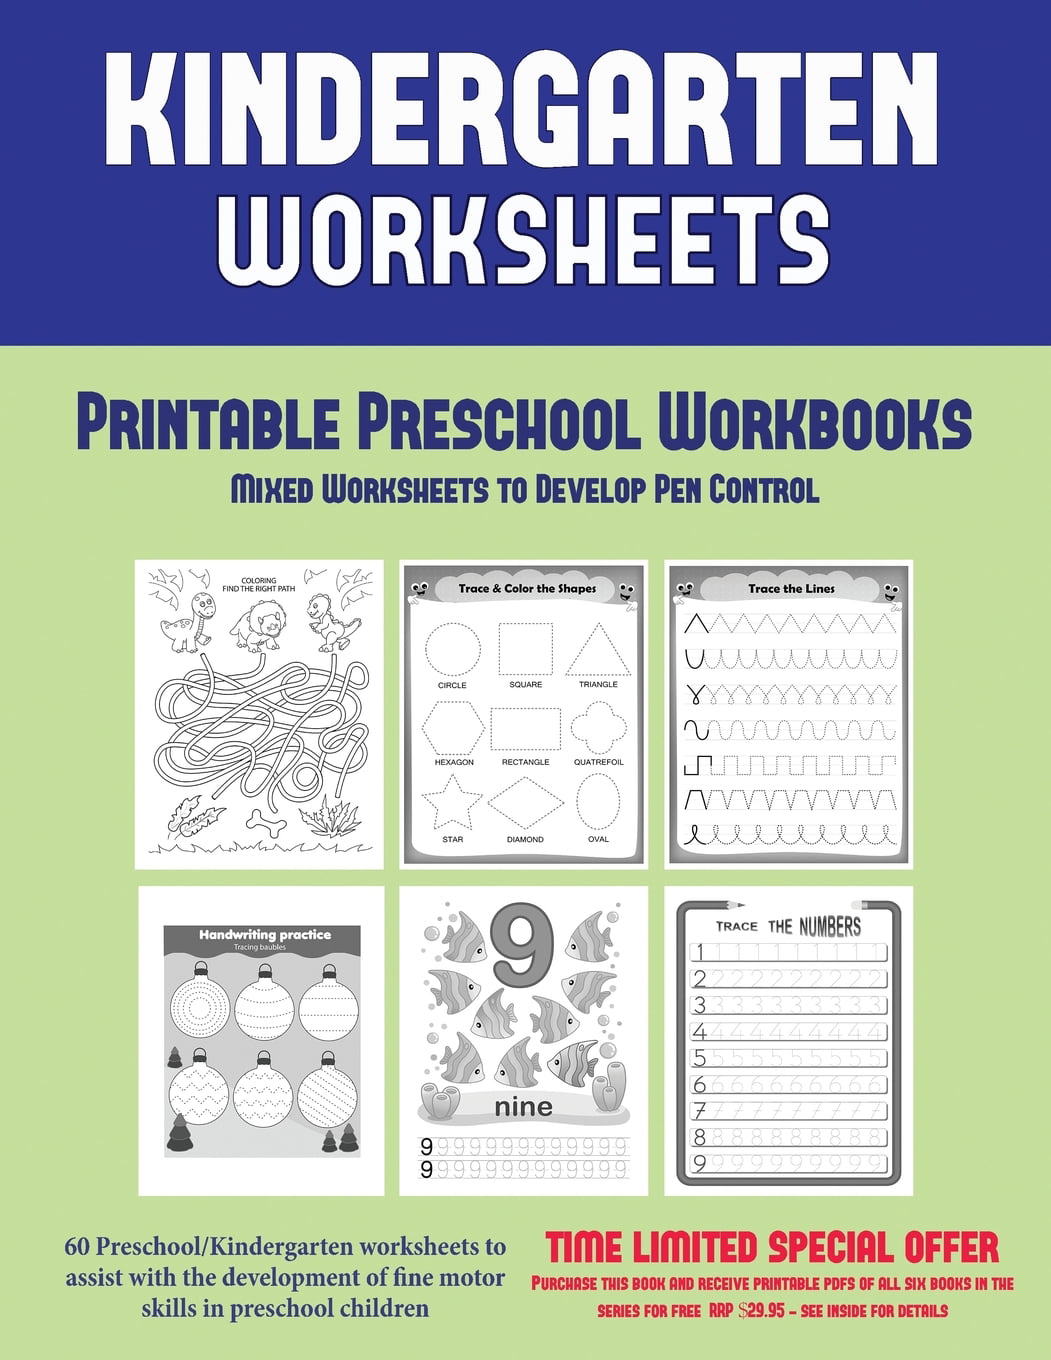 printable-preschool-workbooks-printable-preschool-workbooks-mixed